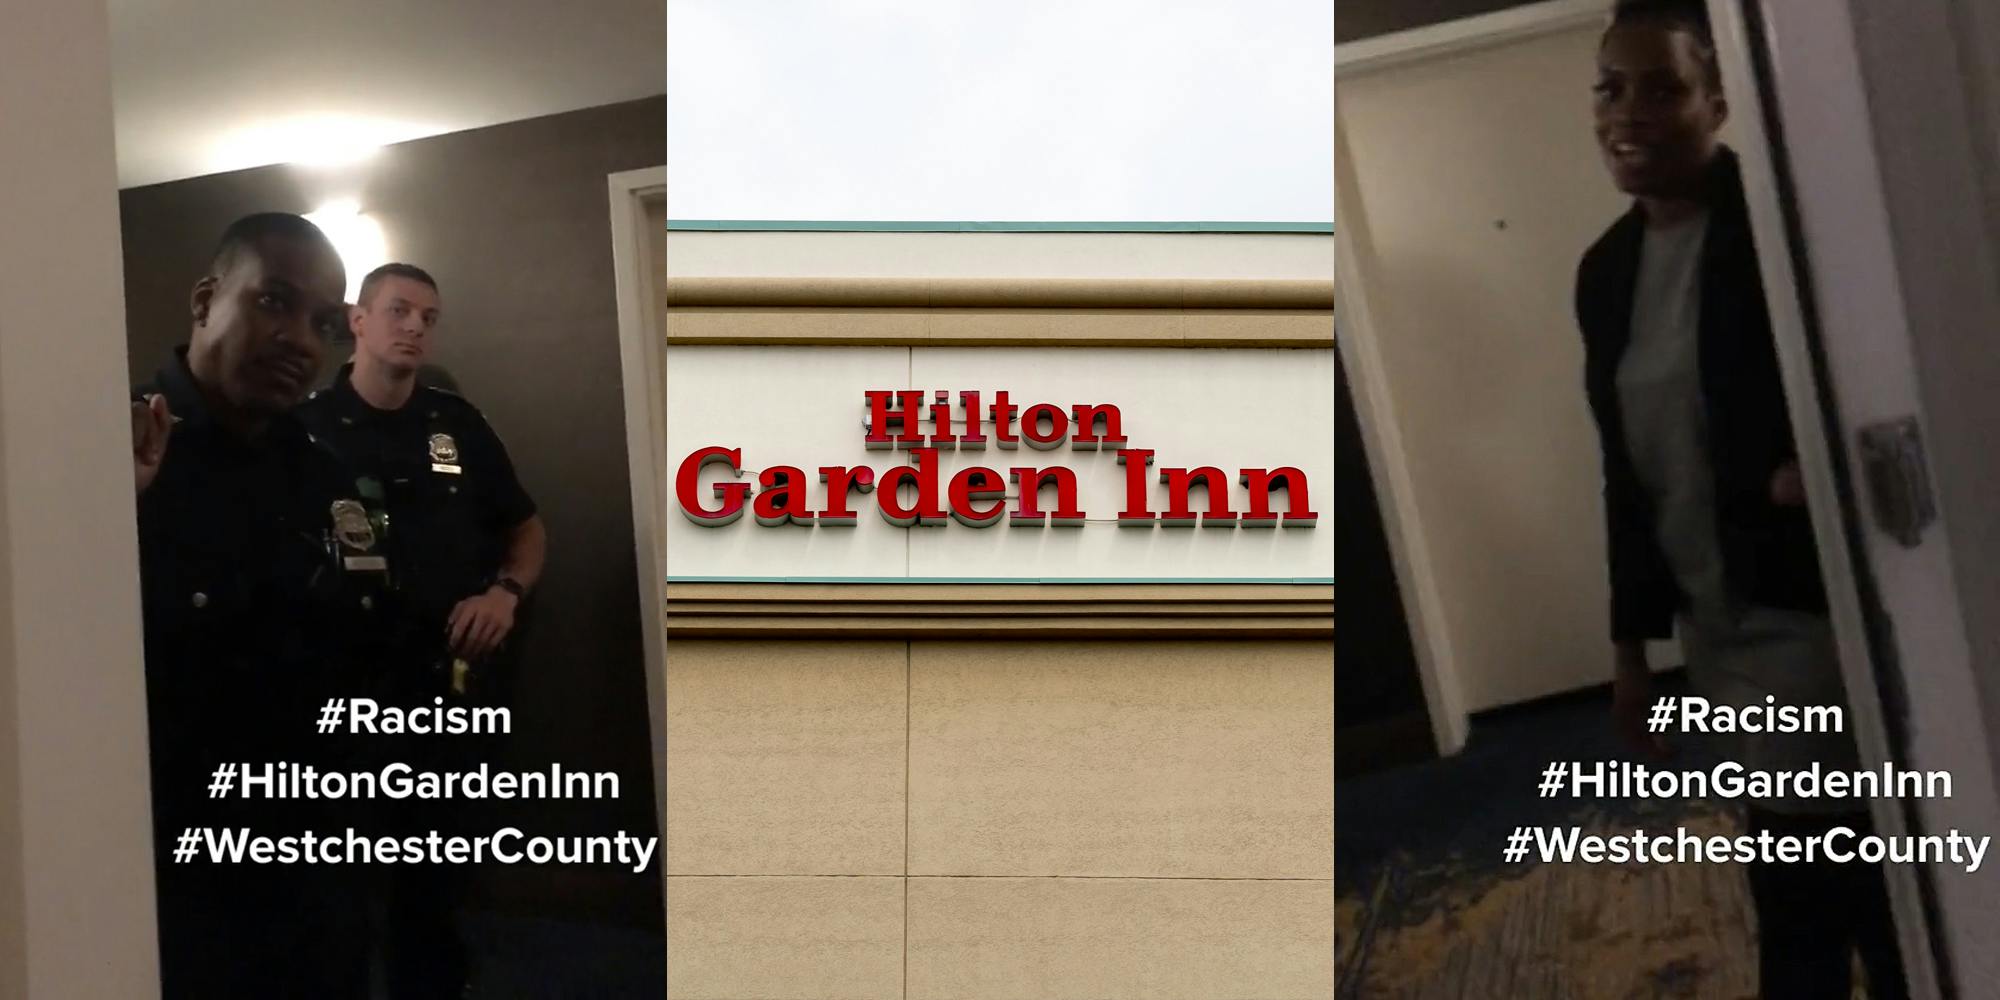 police with hand on open doorway at Hilton Garden Inn hotel room with caption "#Racism #HiltonGardenInn #WestchesterCounty" (l) Hilton Garden Inn sign on building (c) woman with hand on open doorway at Hilton Garden Inn hotel room with caption "#Racism #HiltonGardenInn #WestchesterCounty" (r)